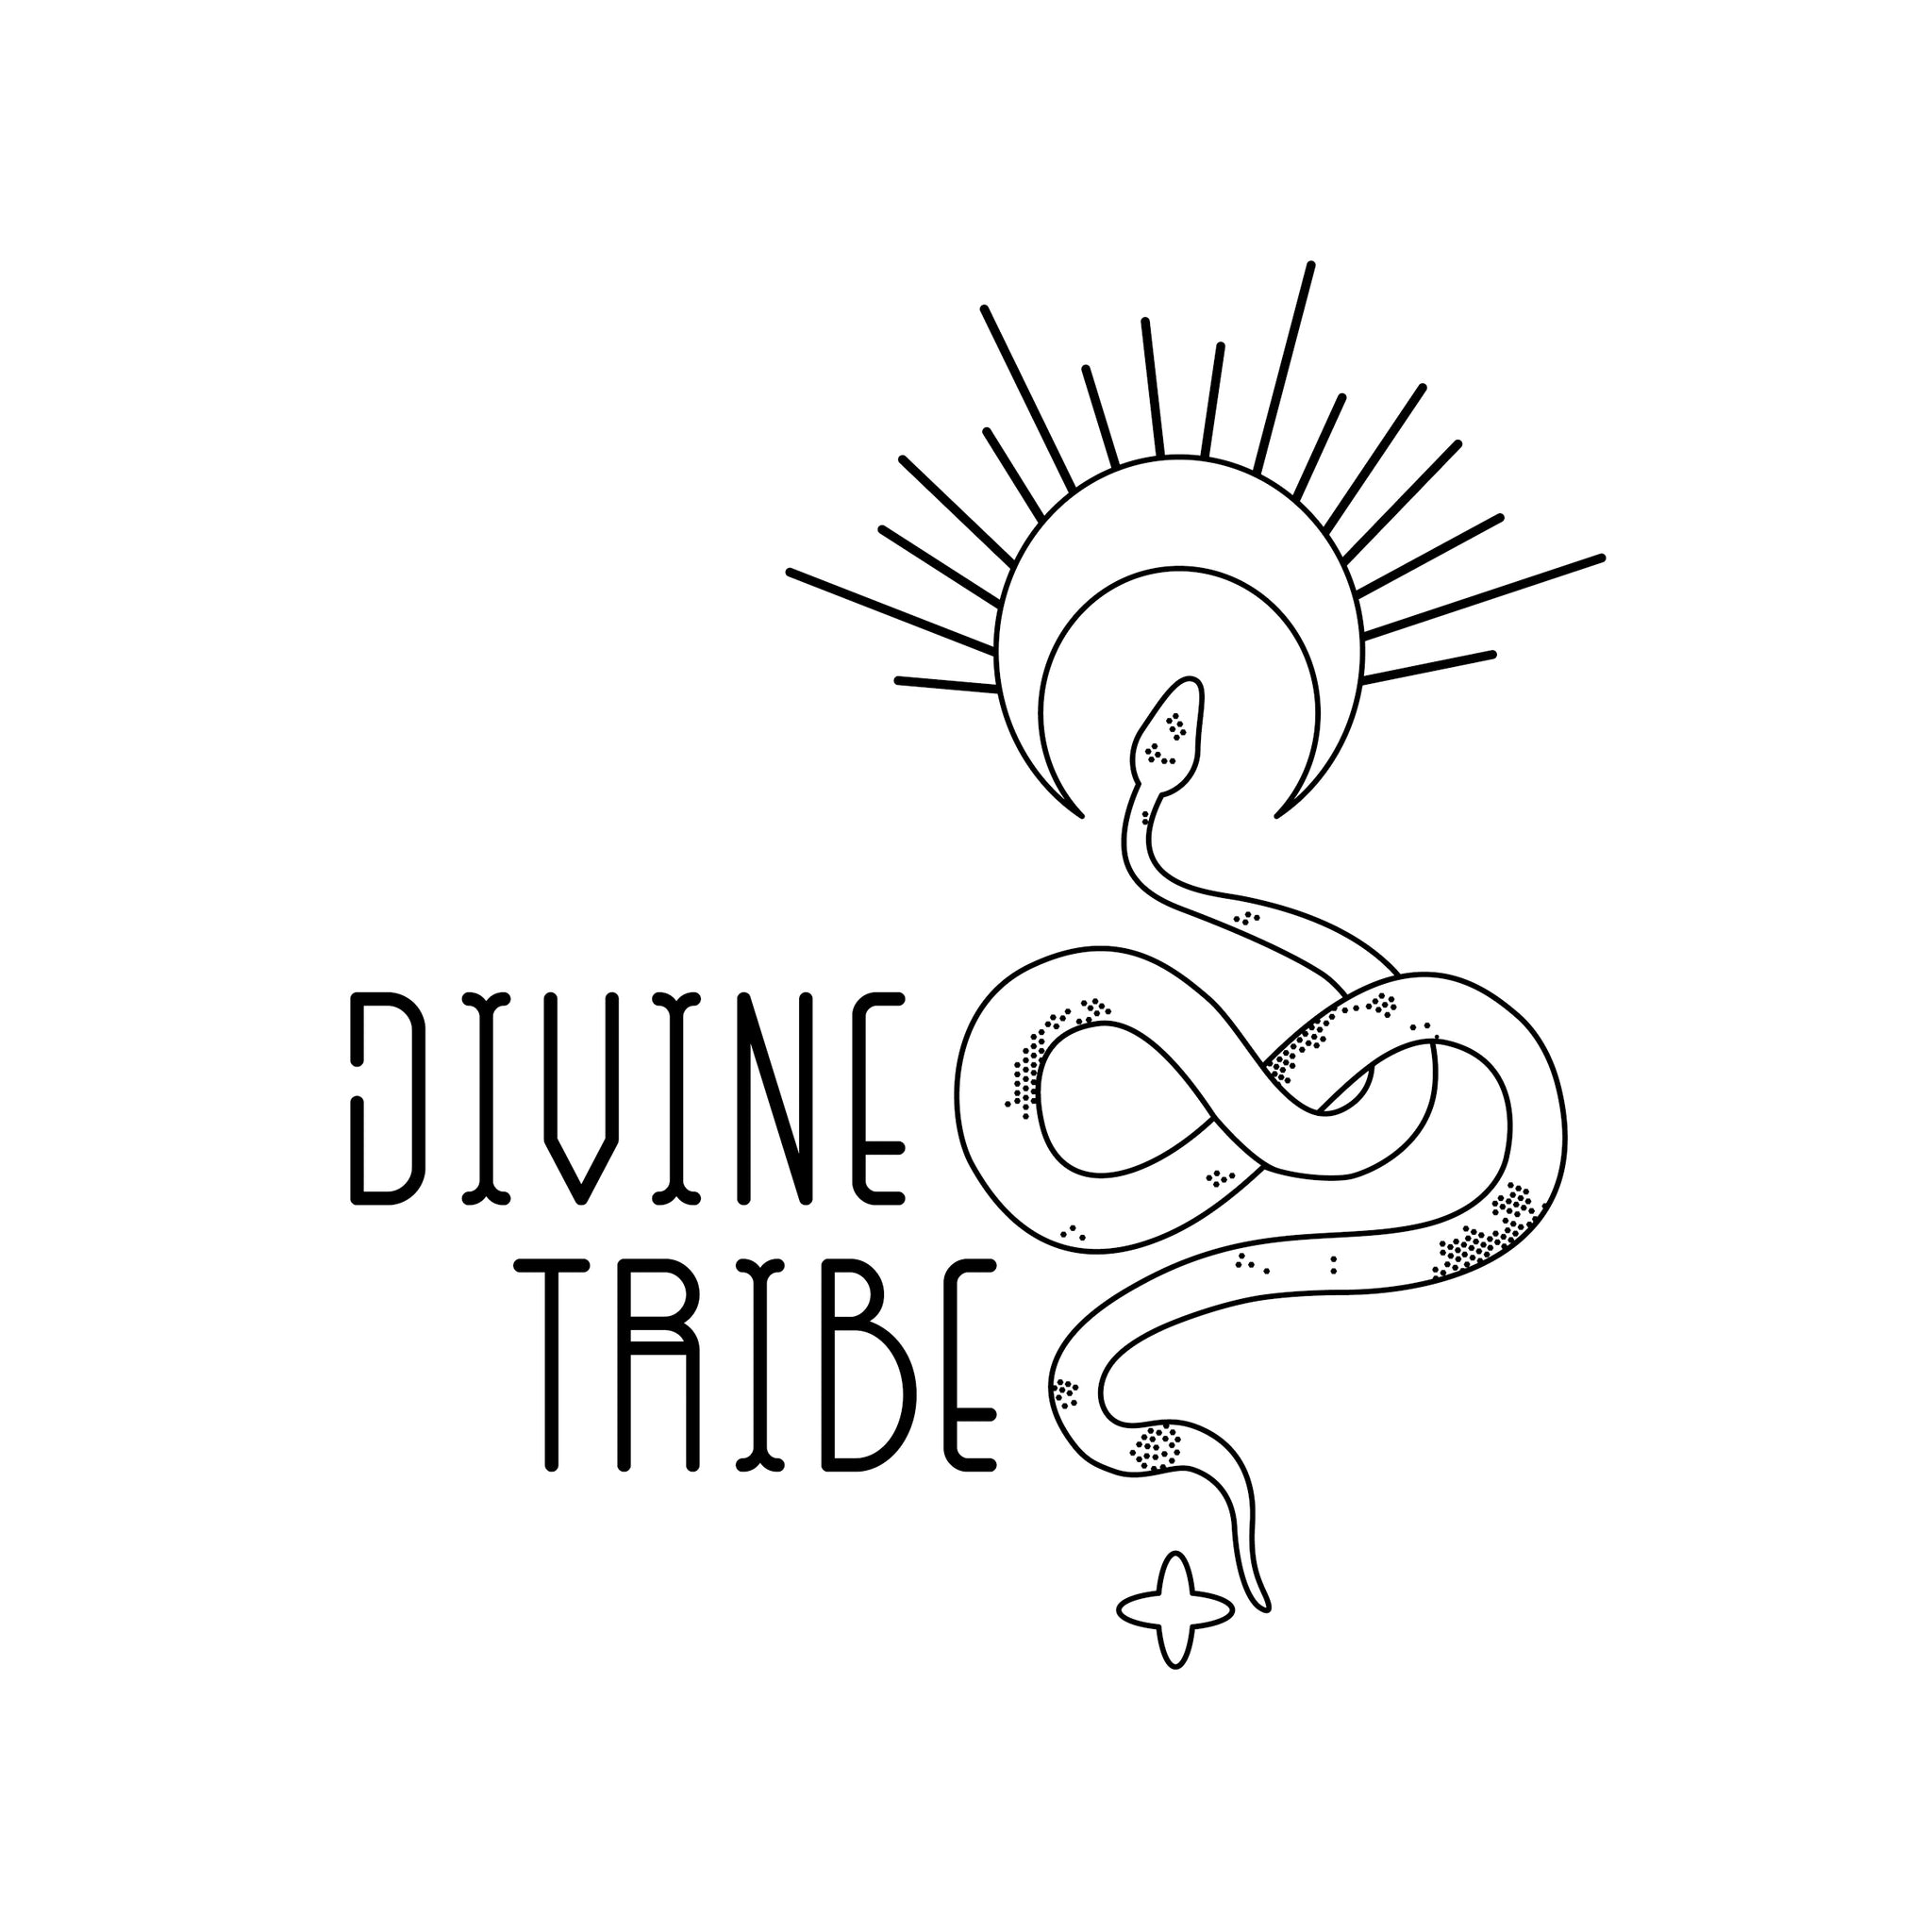 Divine Tribe is born!